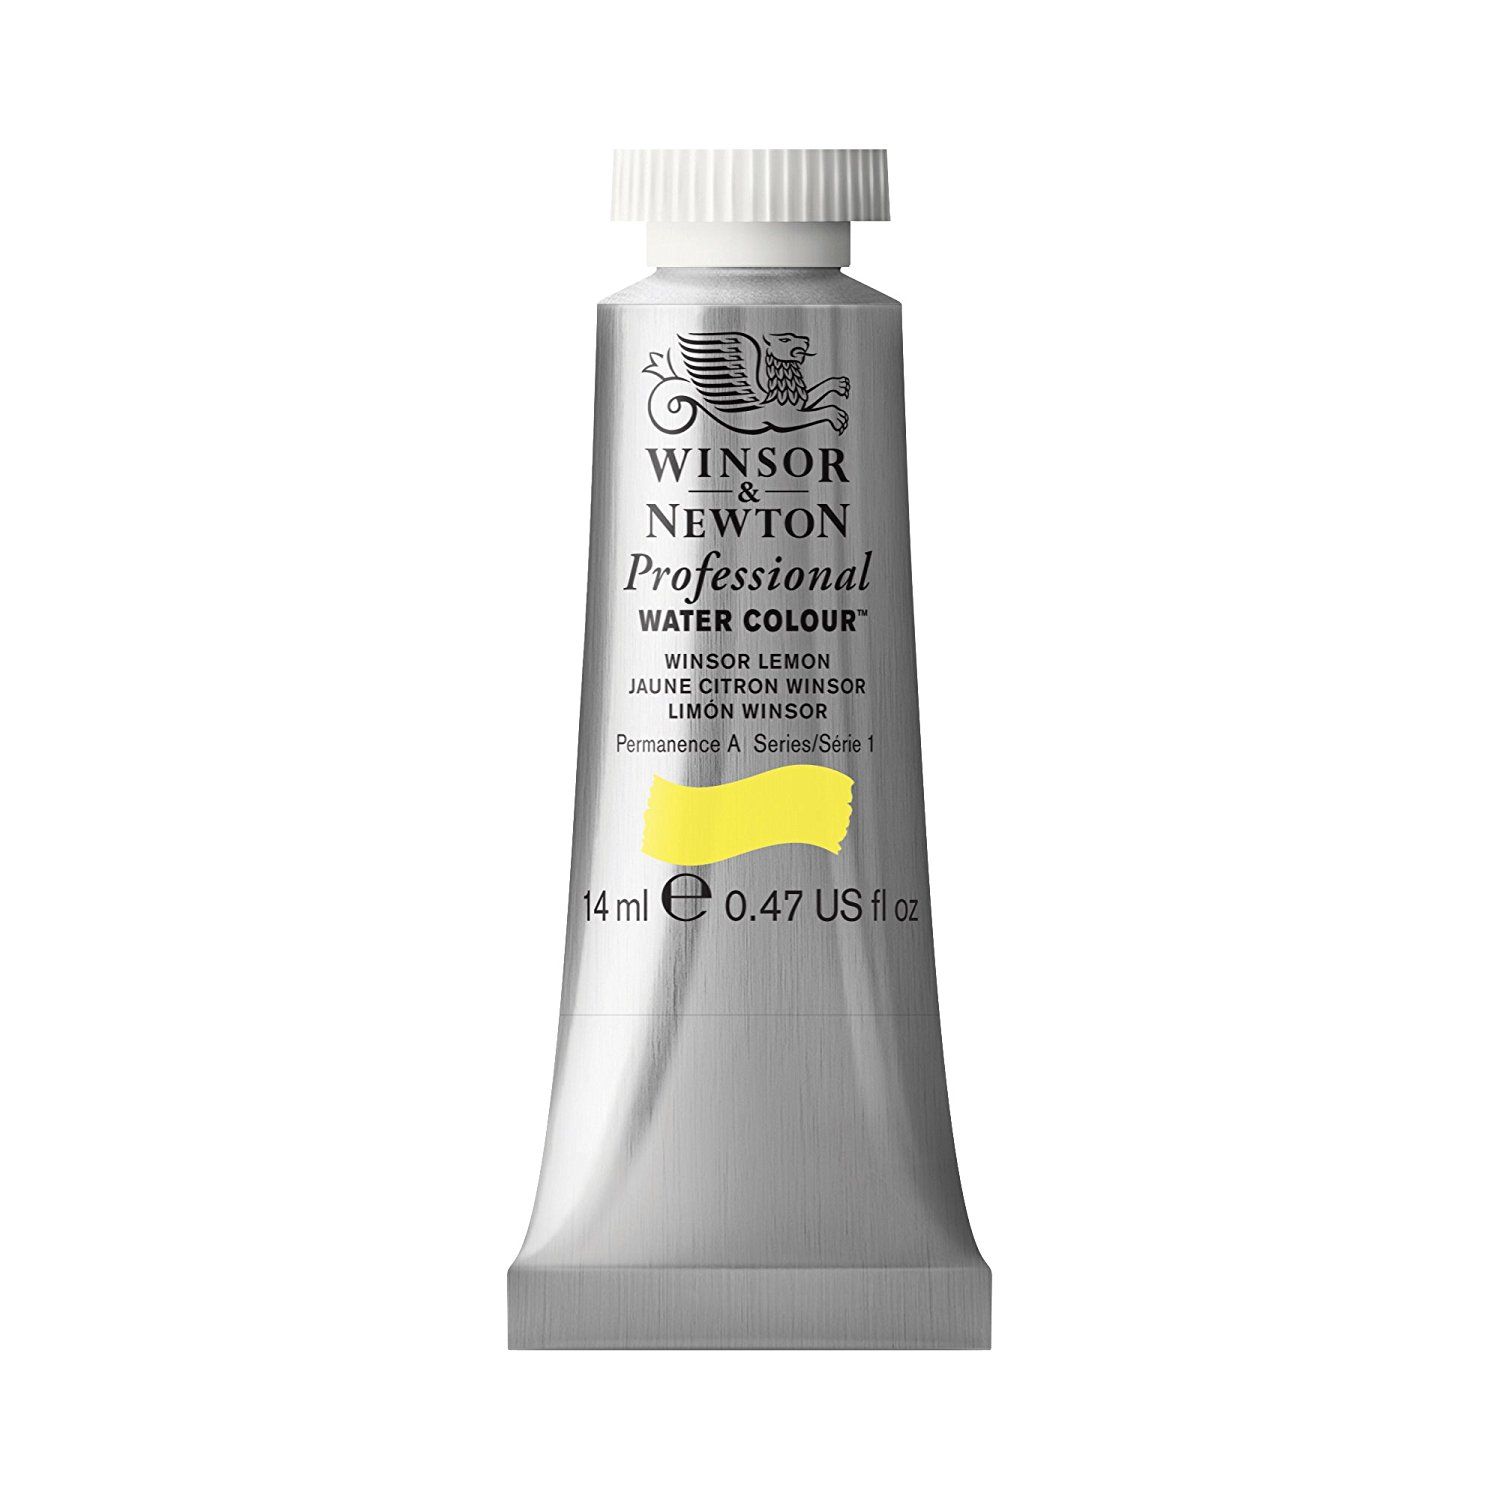 Winsor & Newton Watercolour Paint - Winsor Lemon 14ml